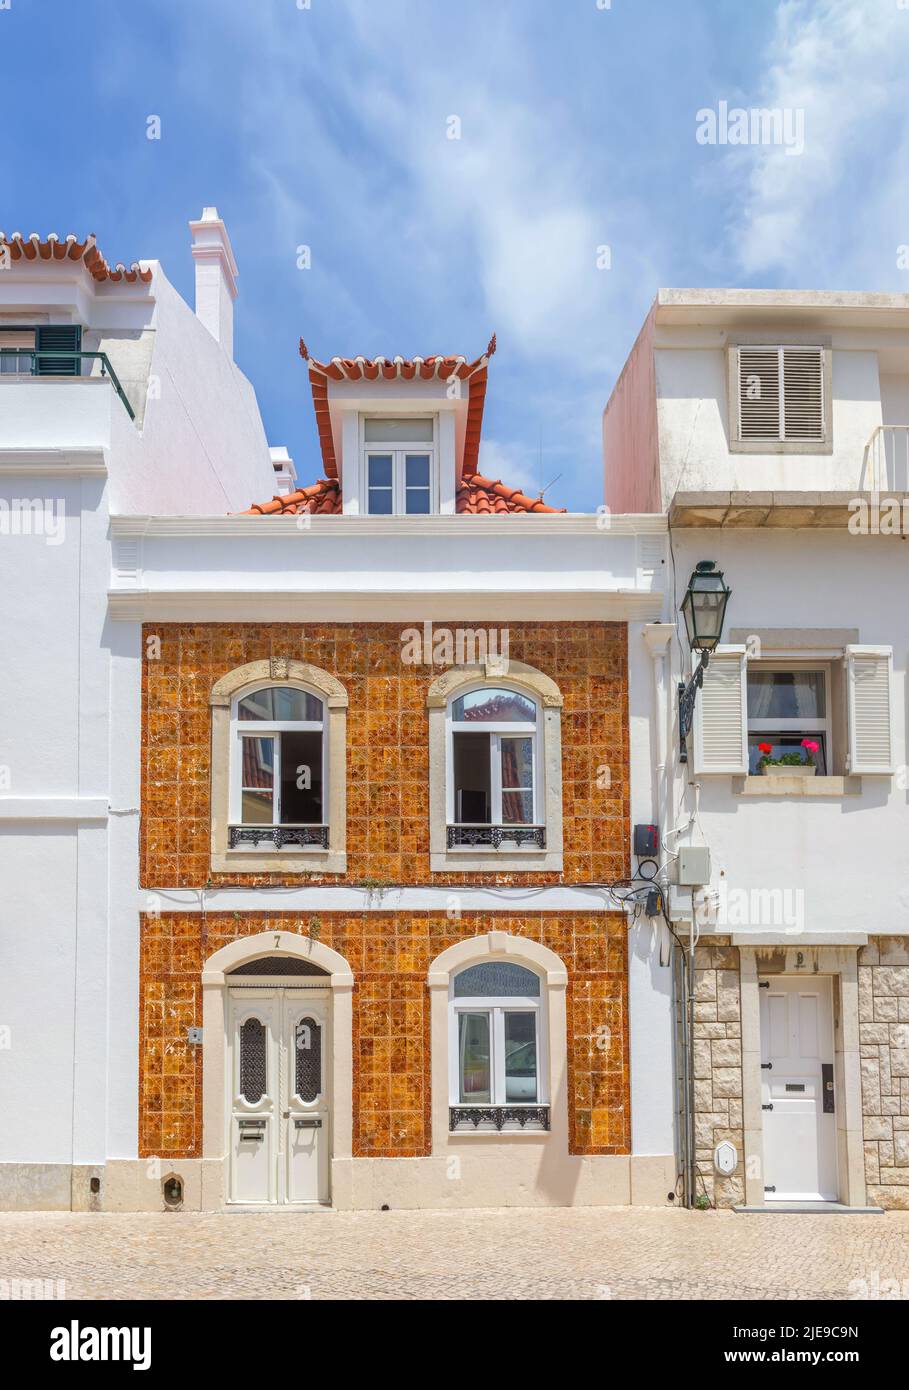 Fragment of the facade of the house, tiled azulejo. Cascais, Portugal Stock Photo